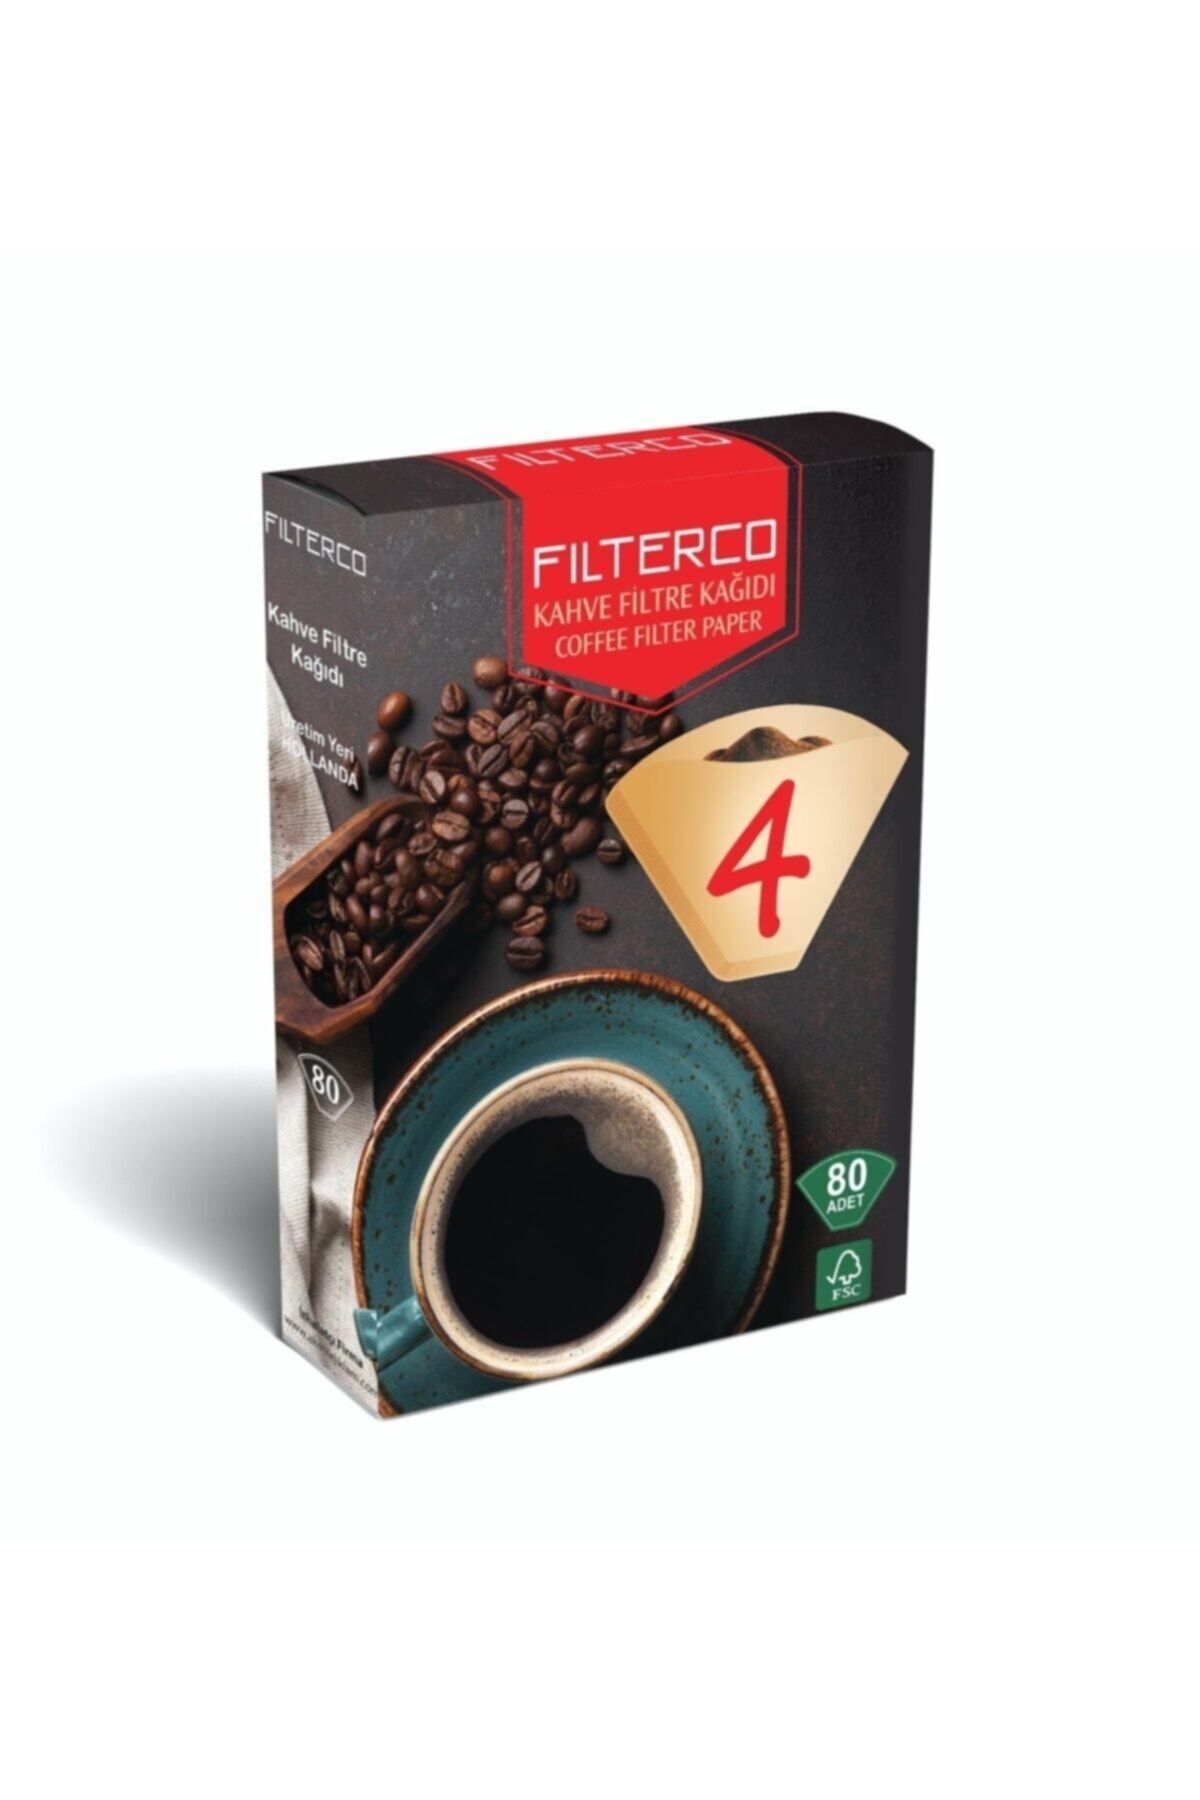 Filterco Kahve Filtre Kağıdı 1 X 4 80 Li